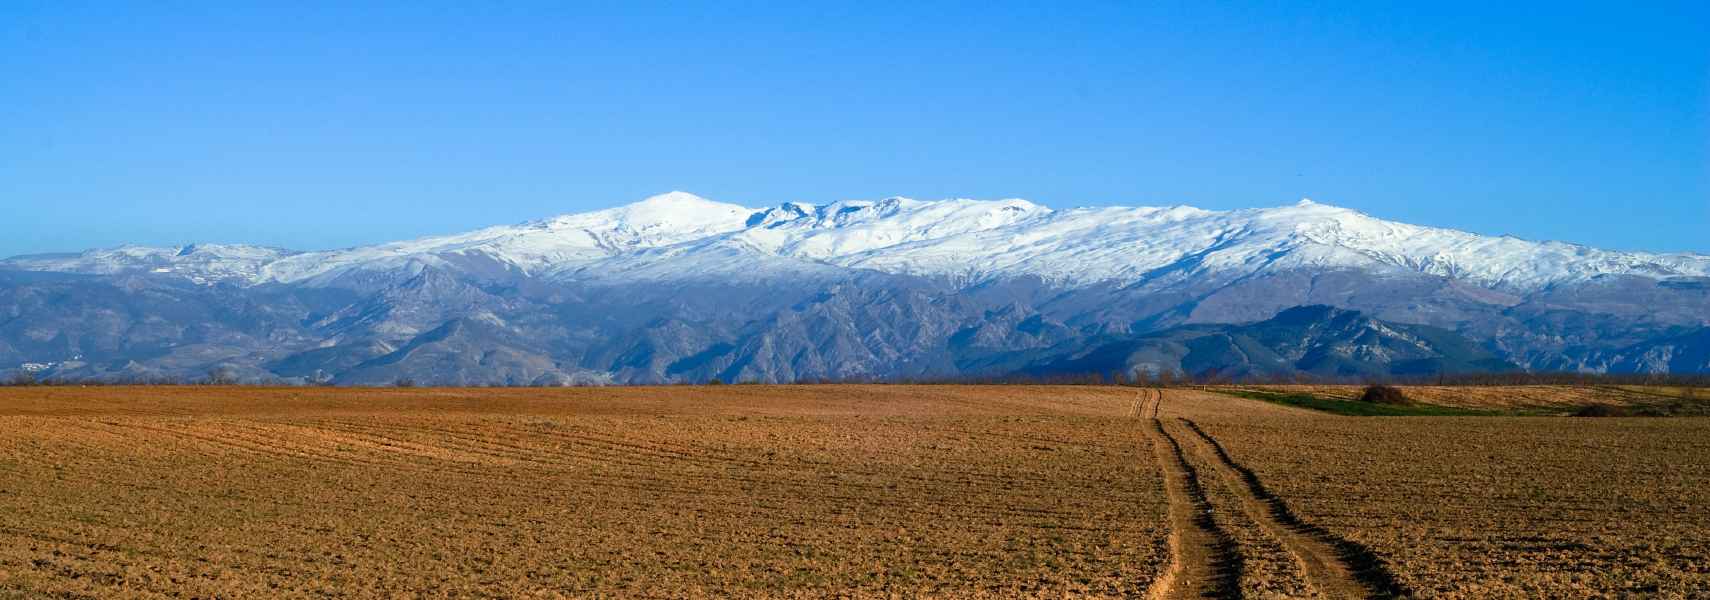 Sierra Nevada Spain with Mount Mulhacén